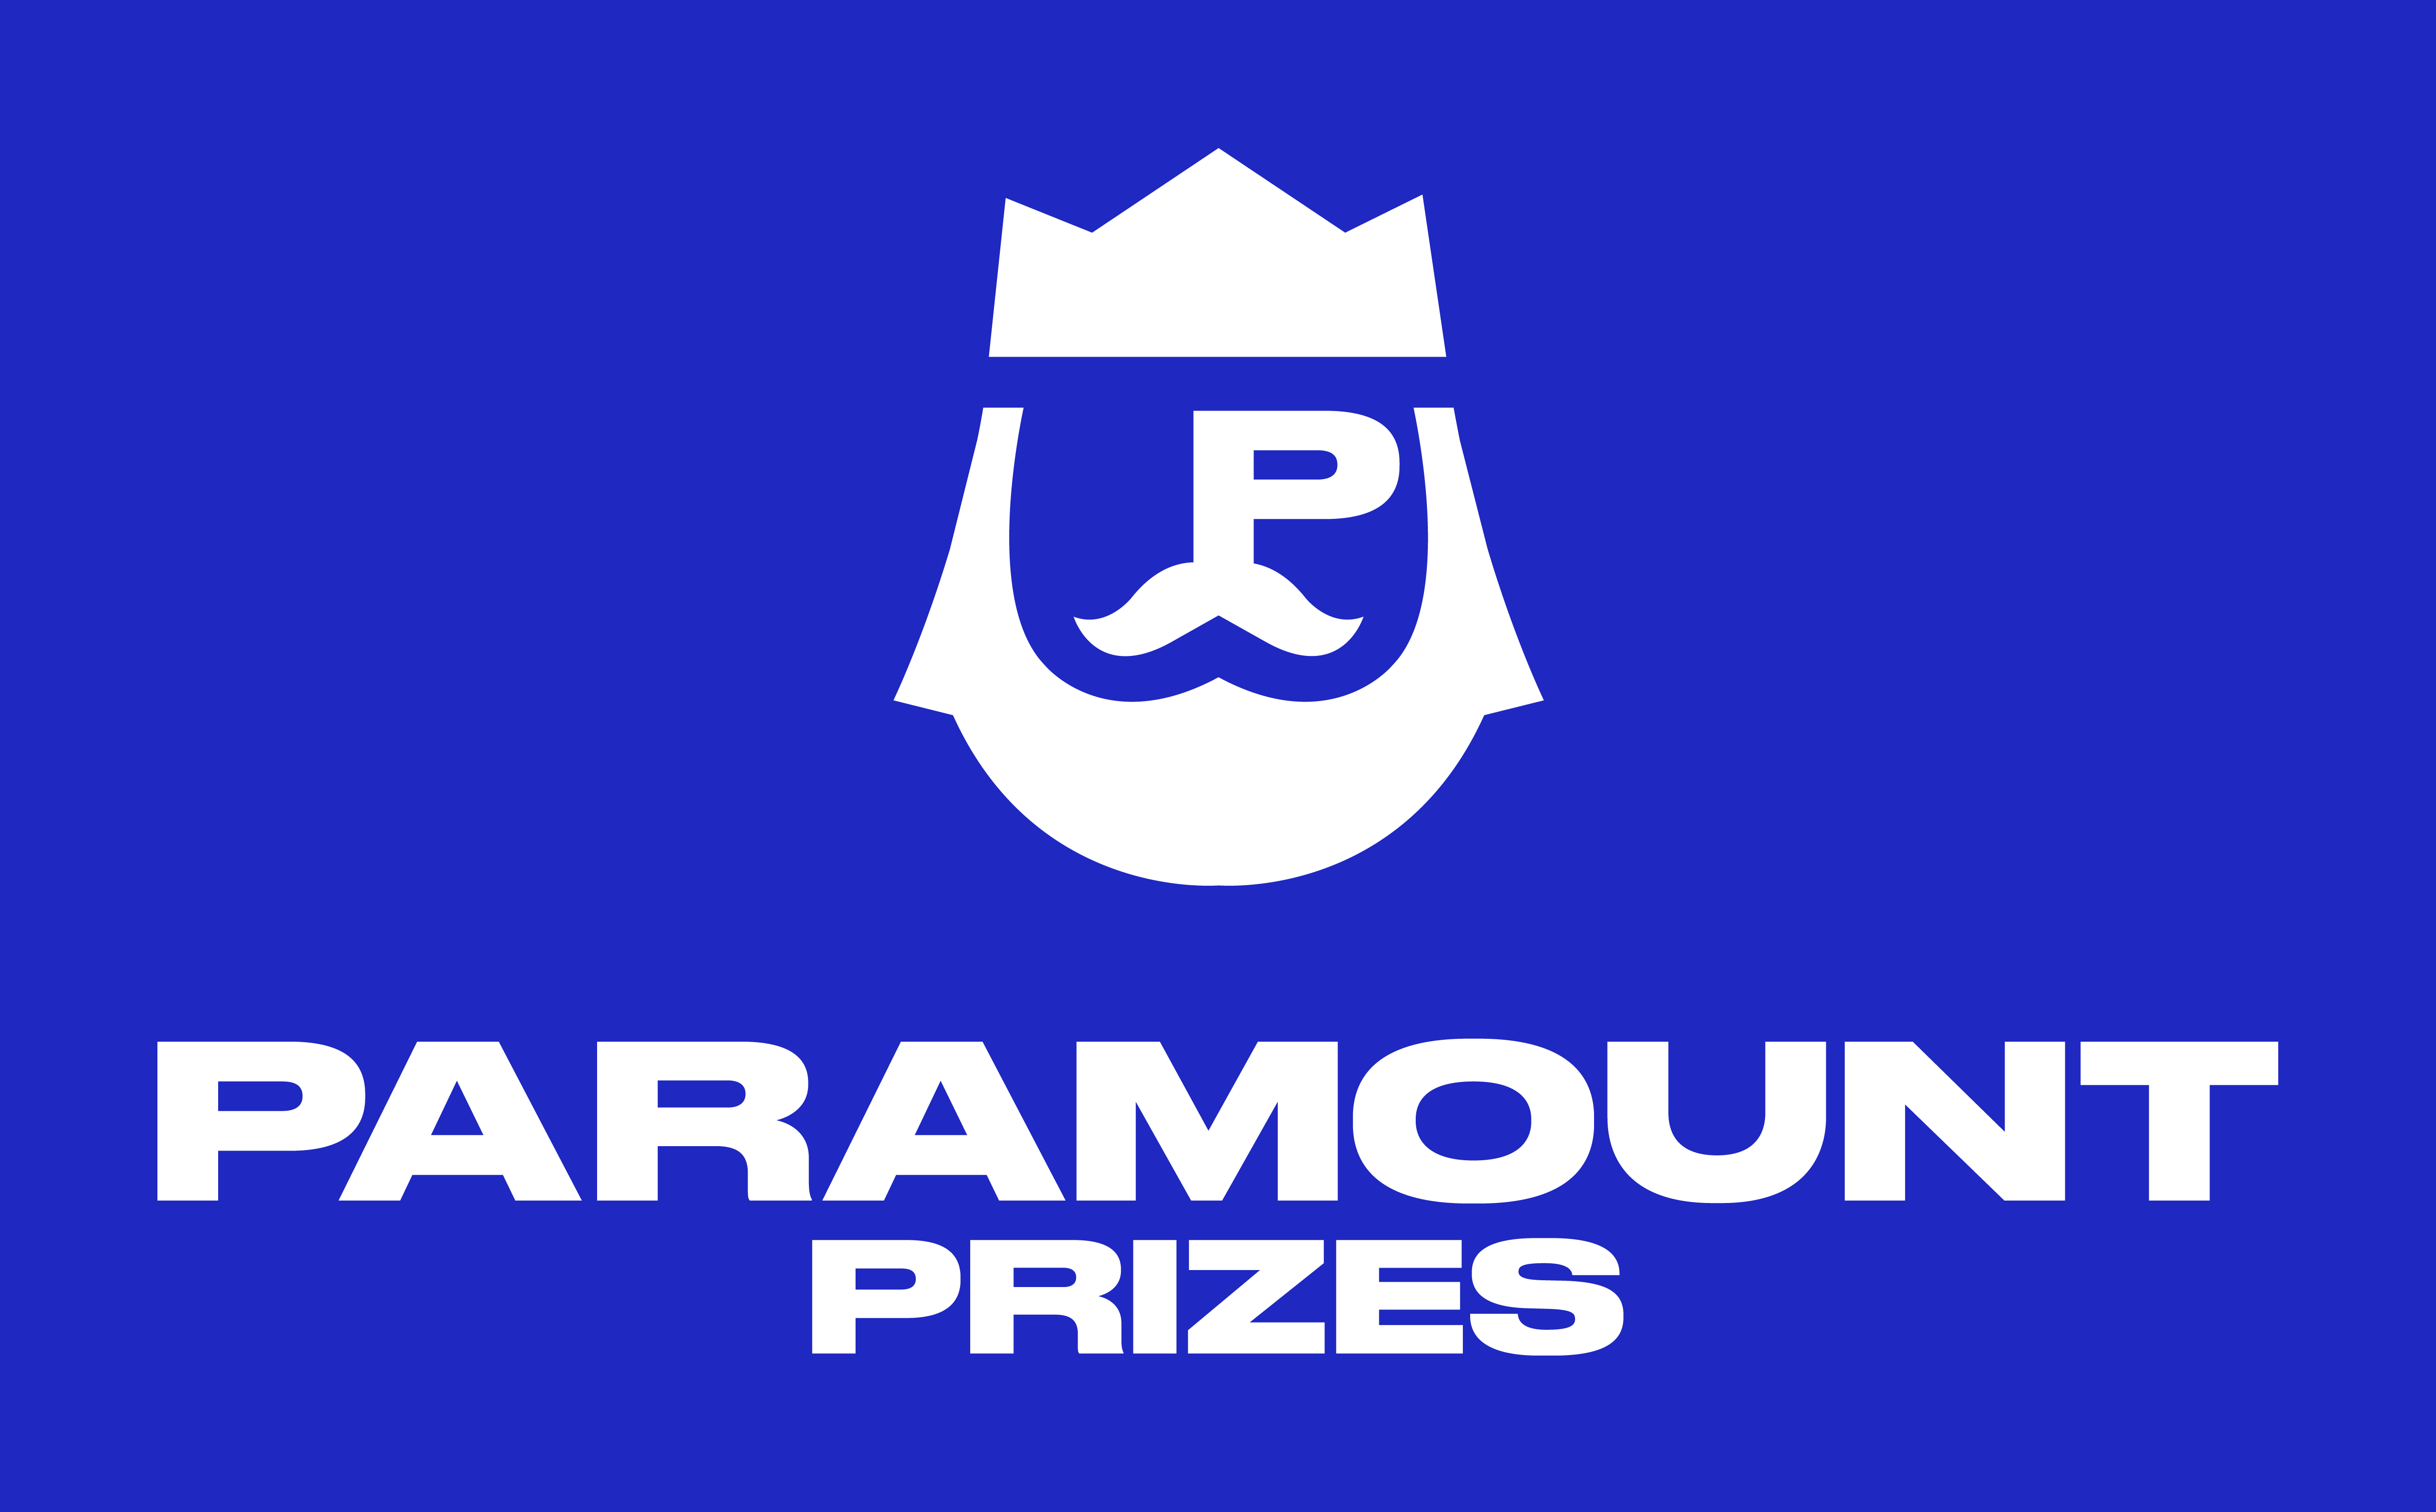 Paramount Prizes sponsor